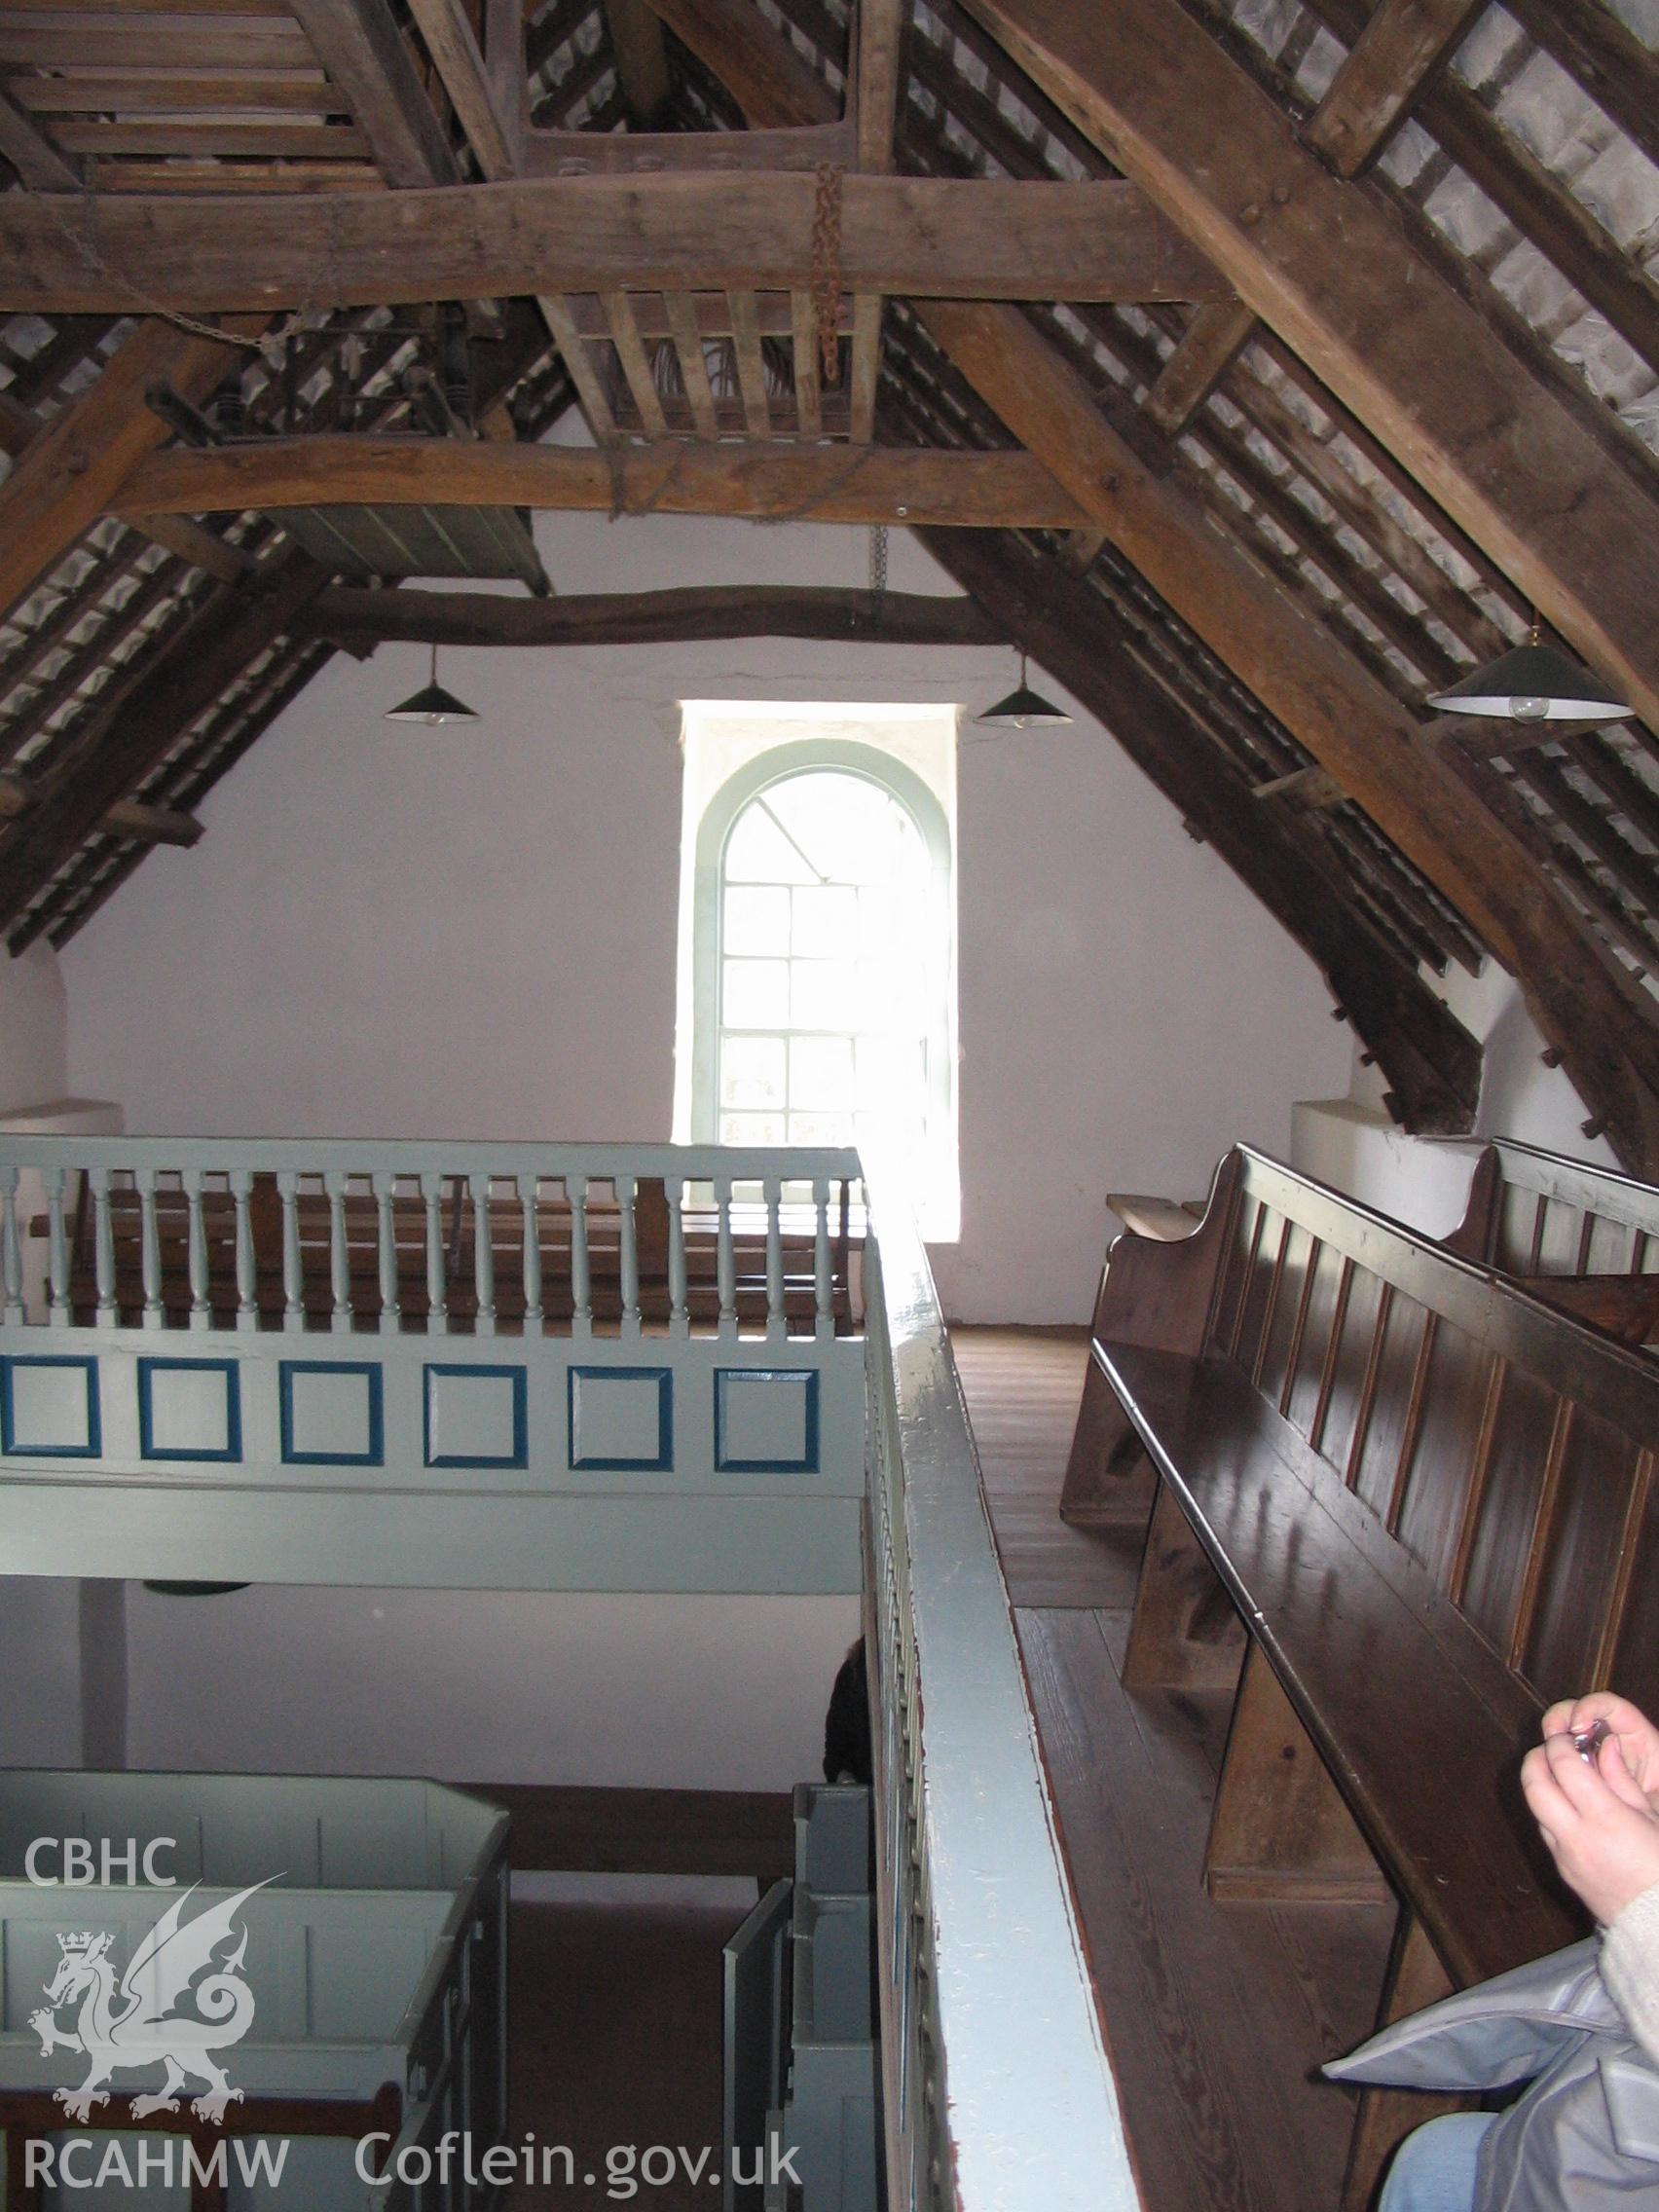 Colour digital photograph showing the interior of the Pen-Rhiw Unitarian Chapel, Welsh Folk Museum, Castle Hill, St. Fagans.